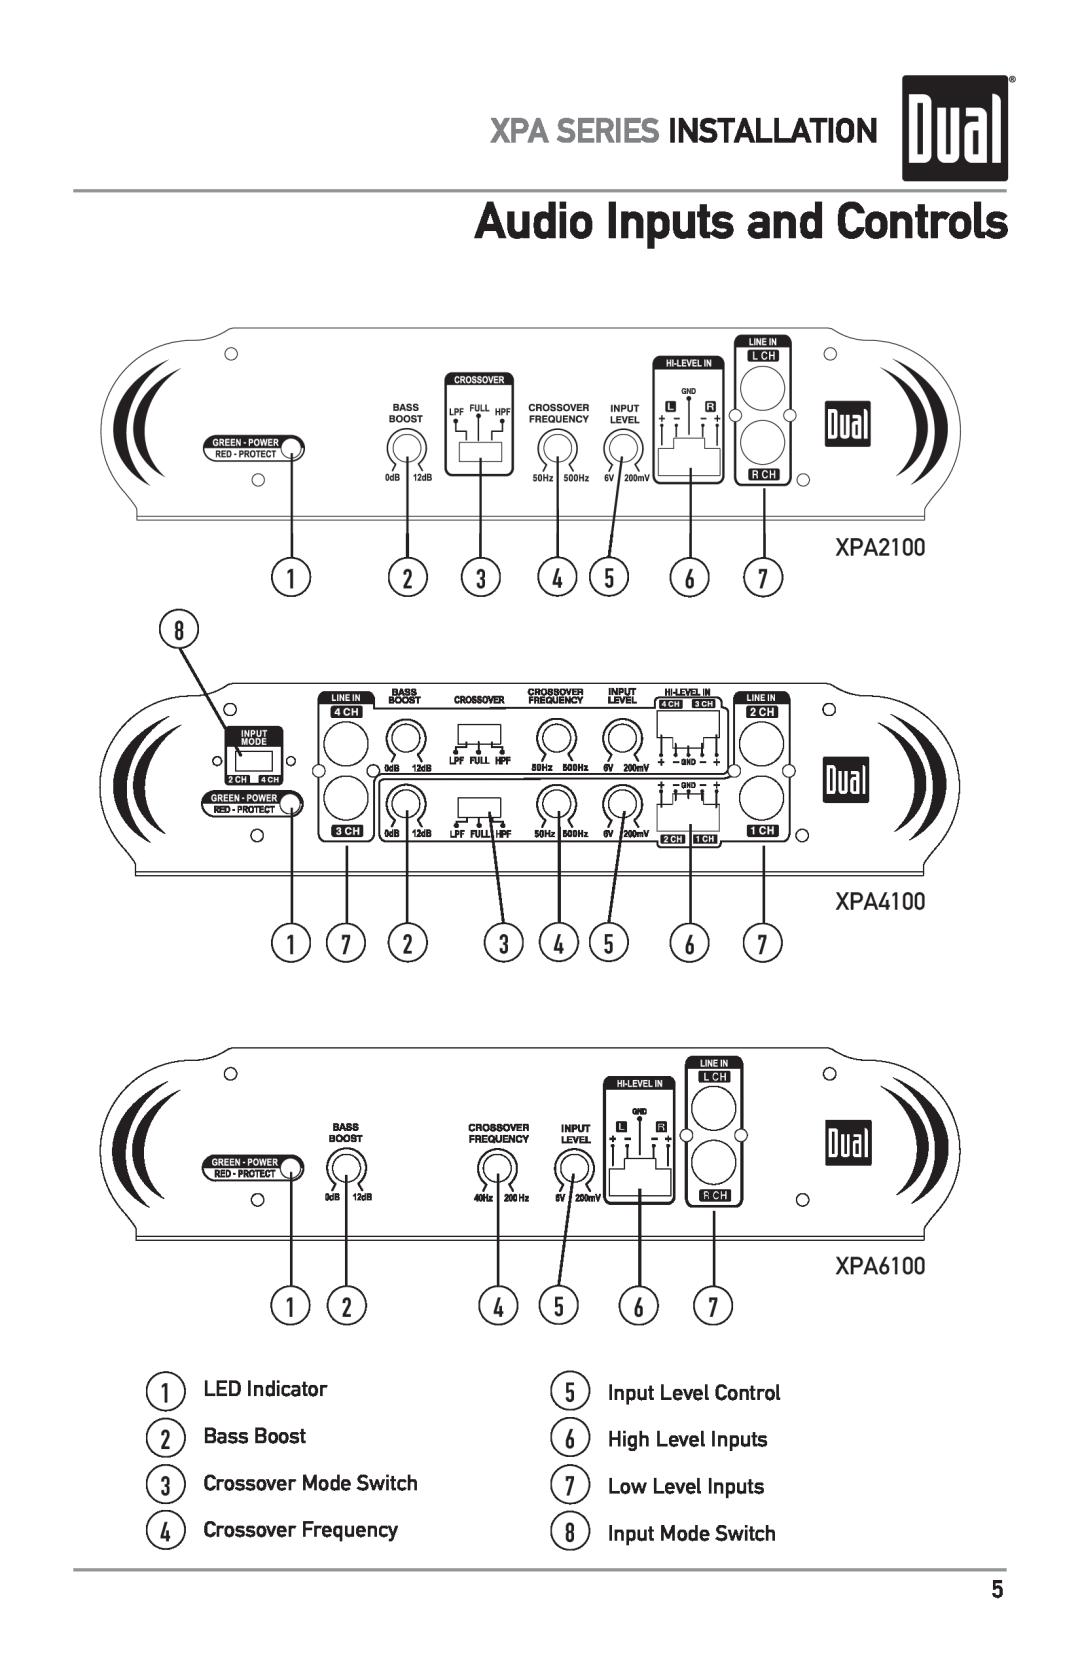 Dual XPA4100 owner manual Audio Inputs and Controls, Xpa Series Installation, XPA2100, XPA6100 